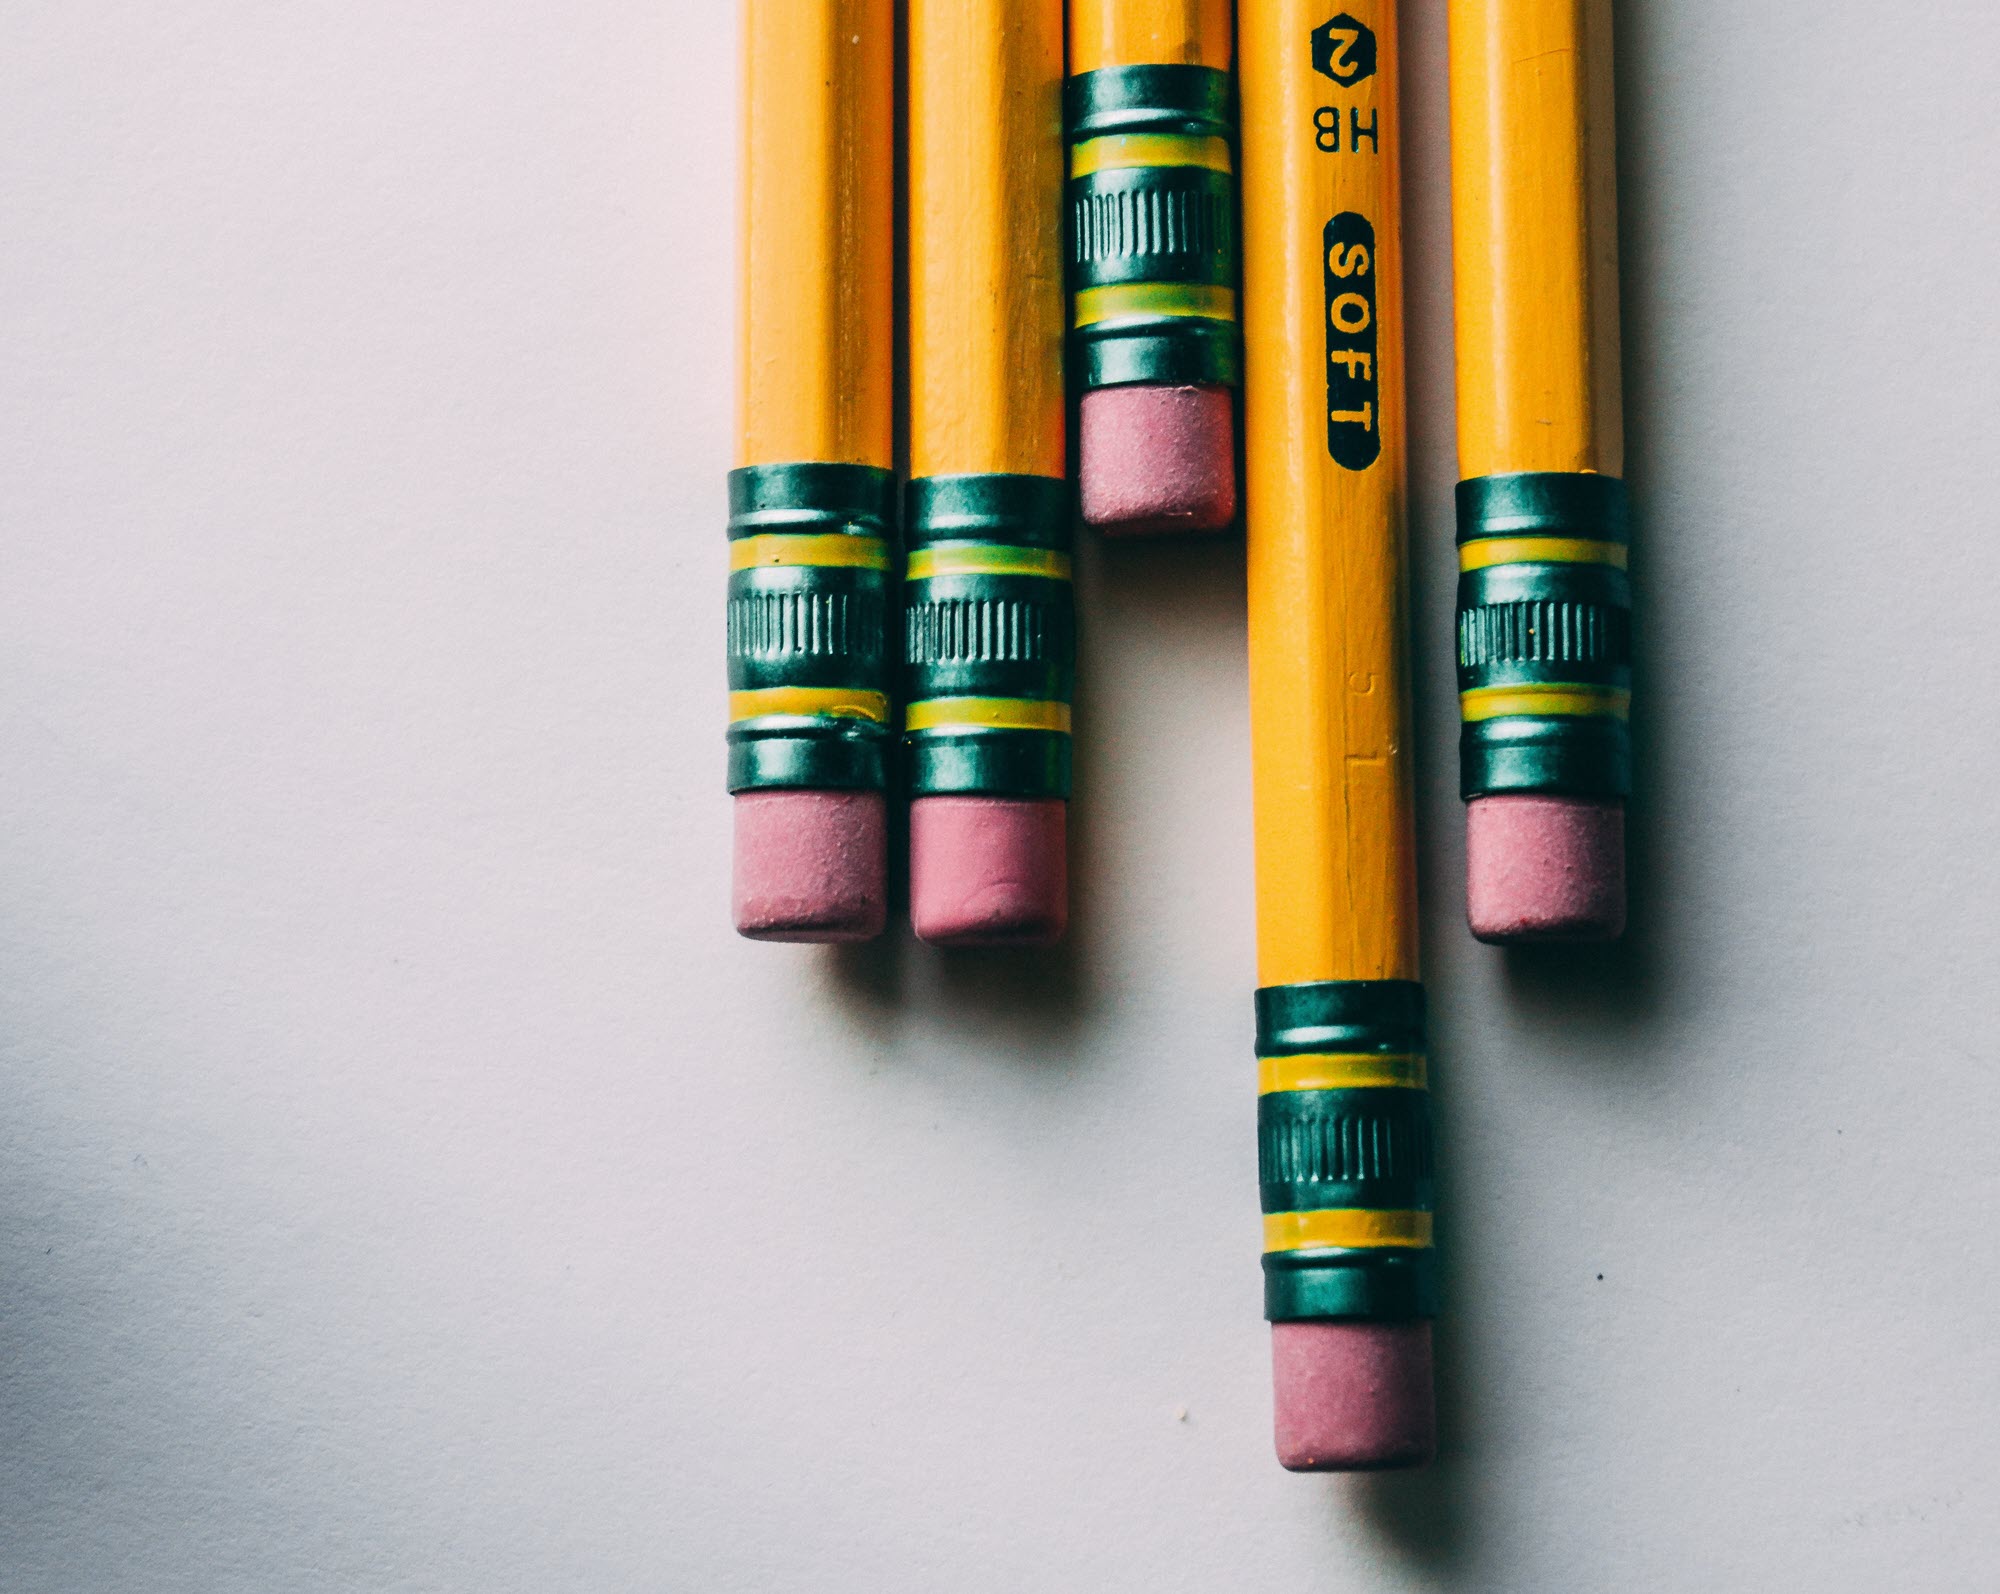 phot of pencils